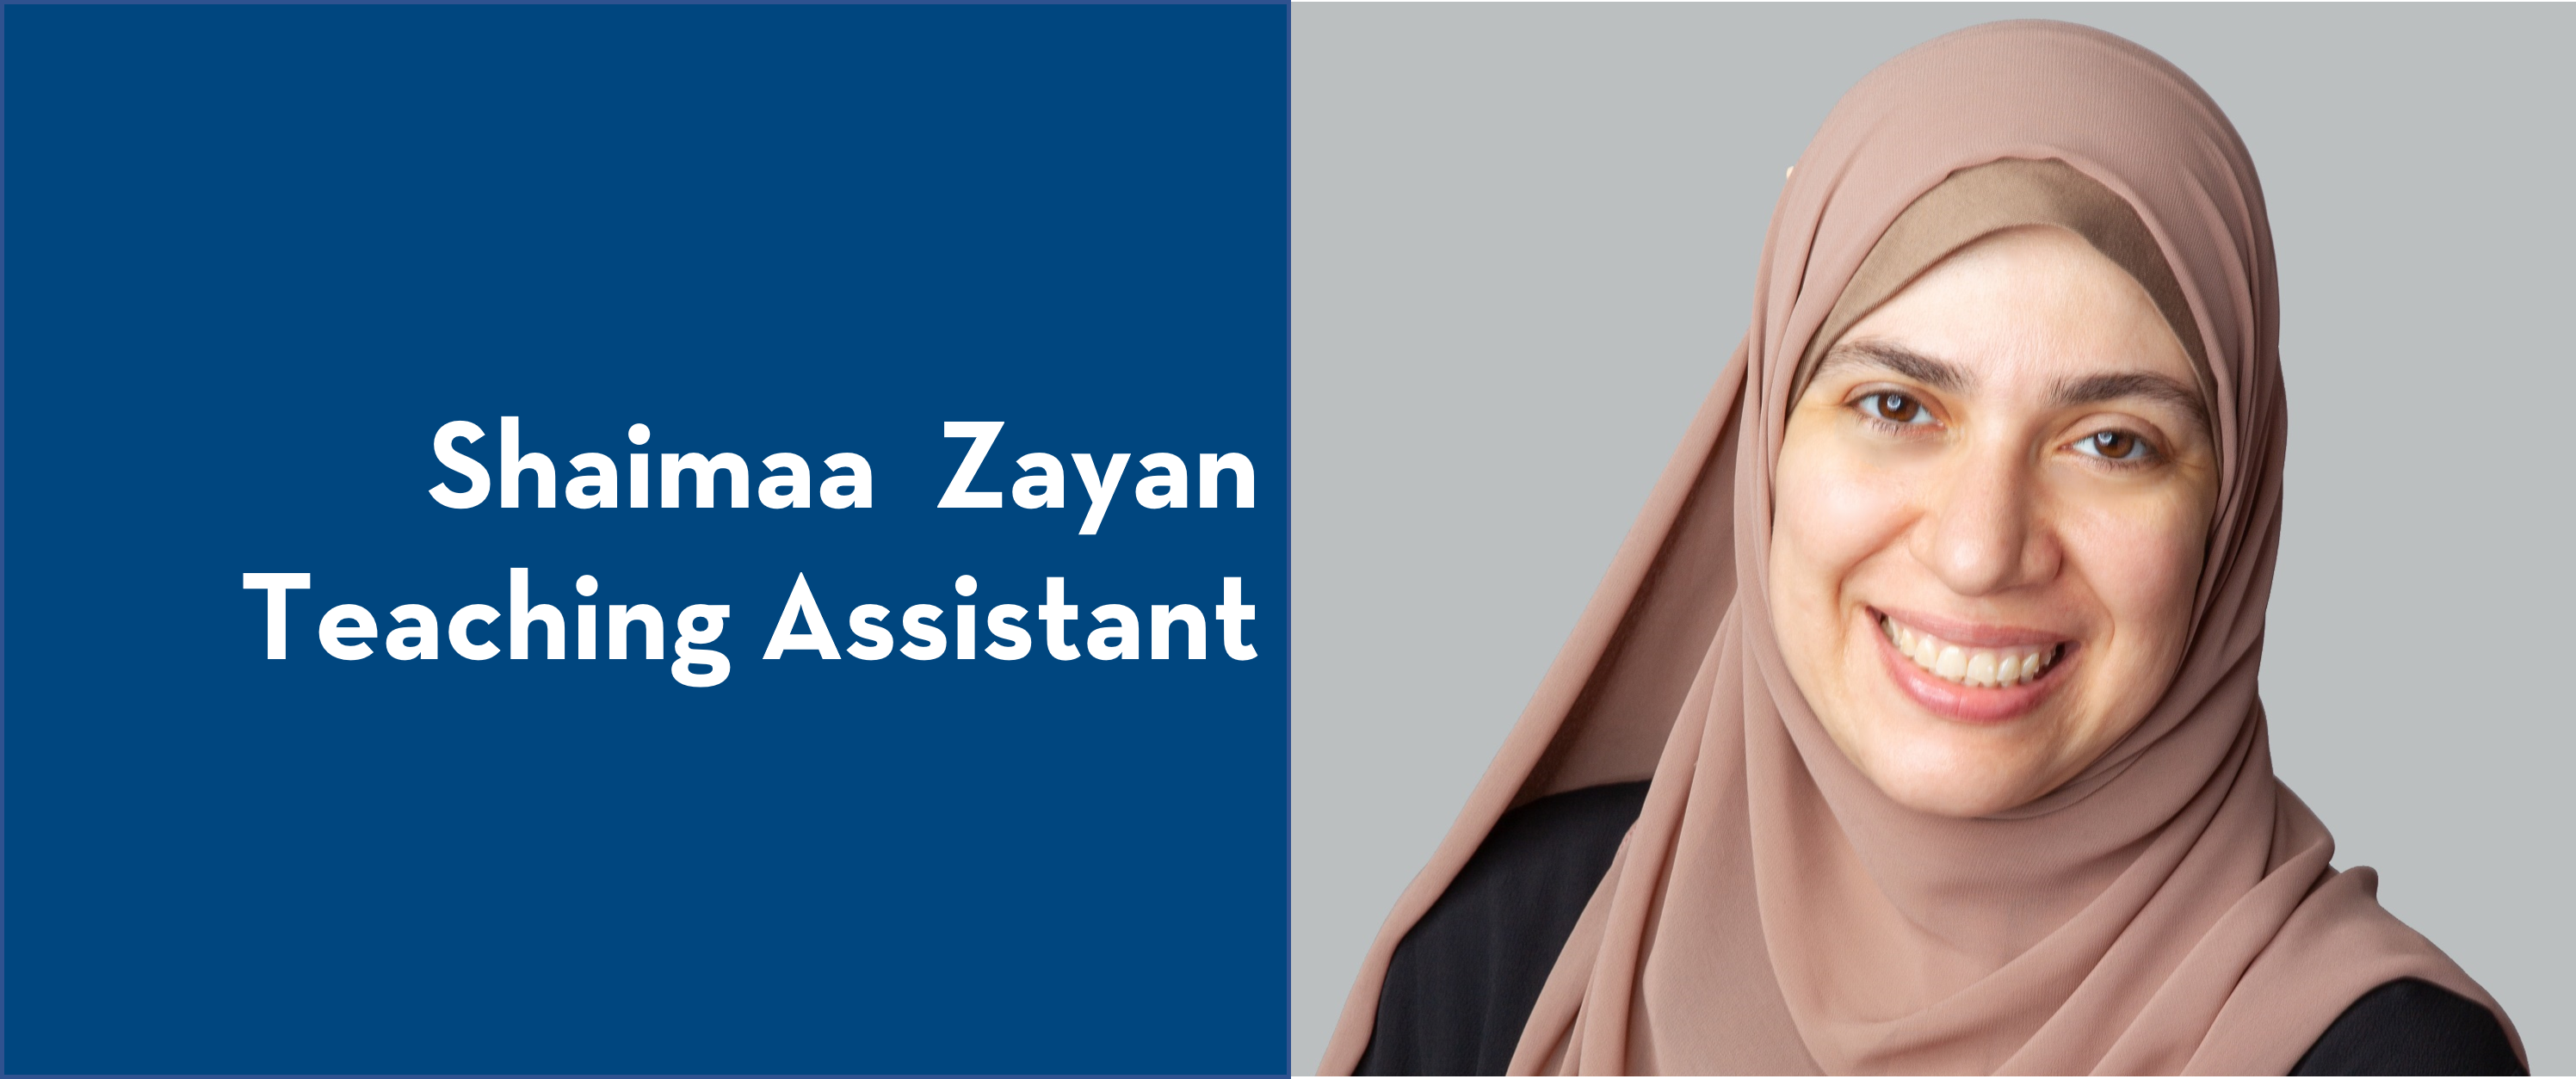 Shaimaa Zayan Teaching Assistant